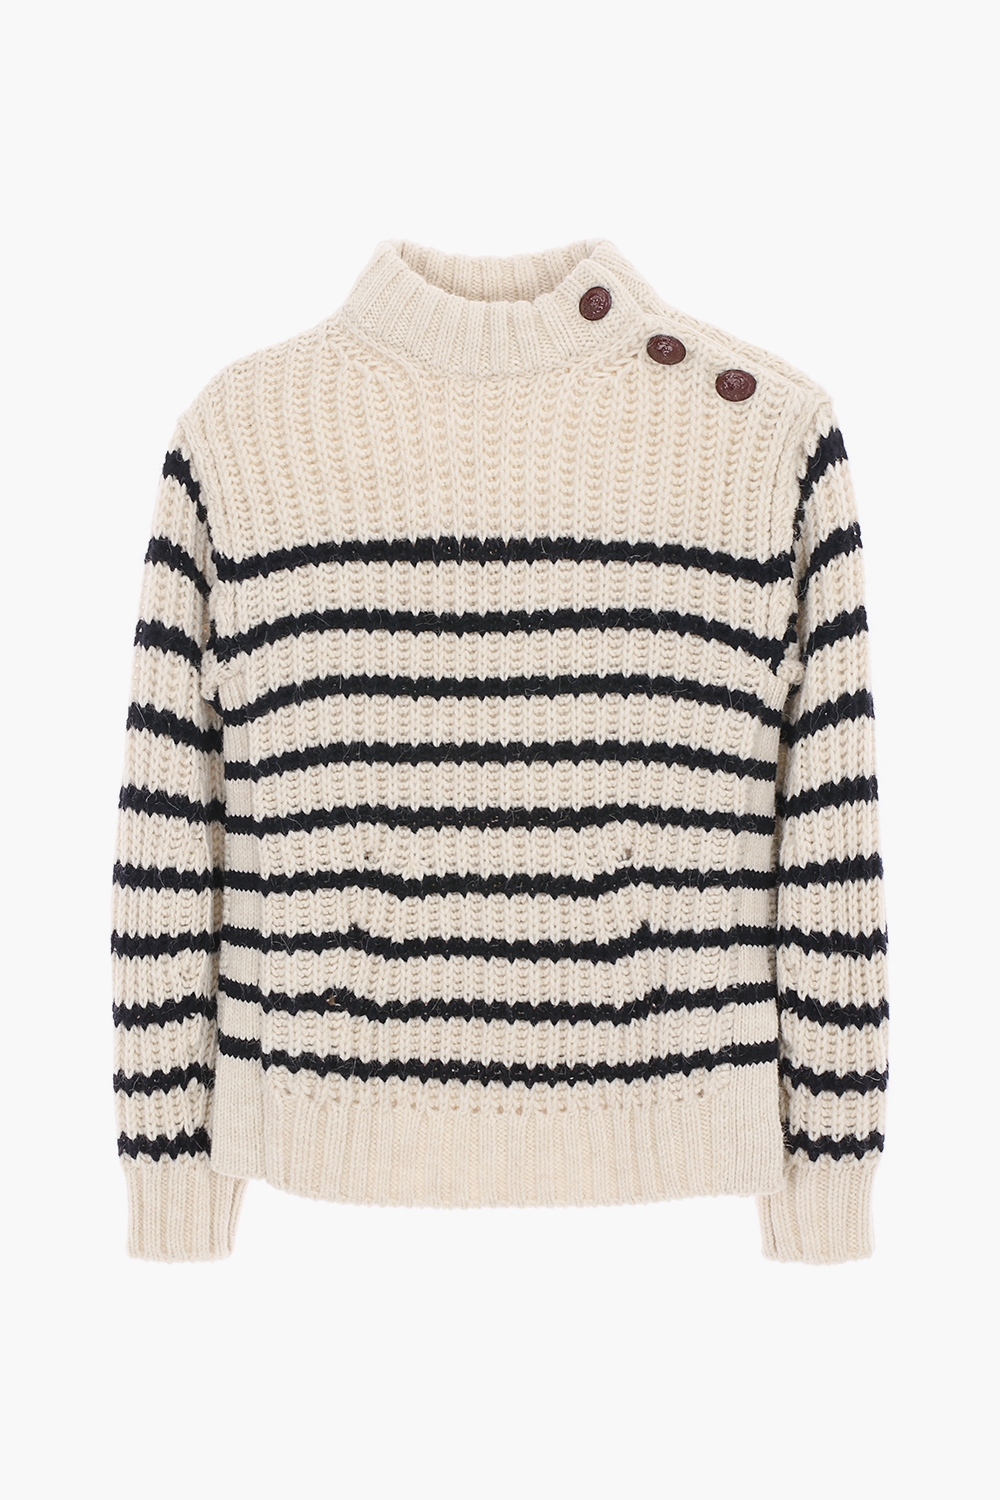 Marlony Sweater